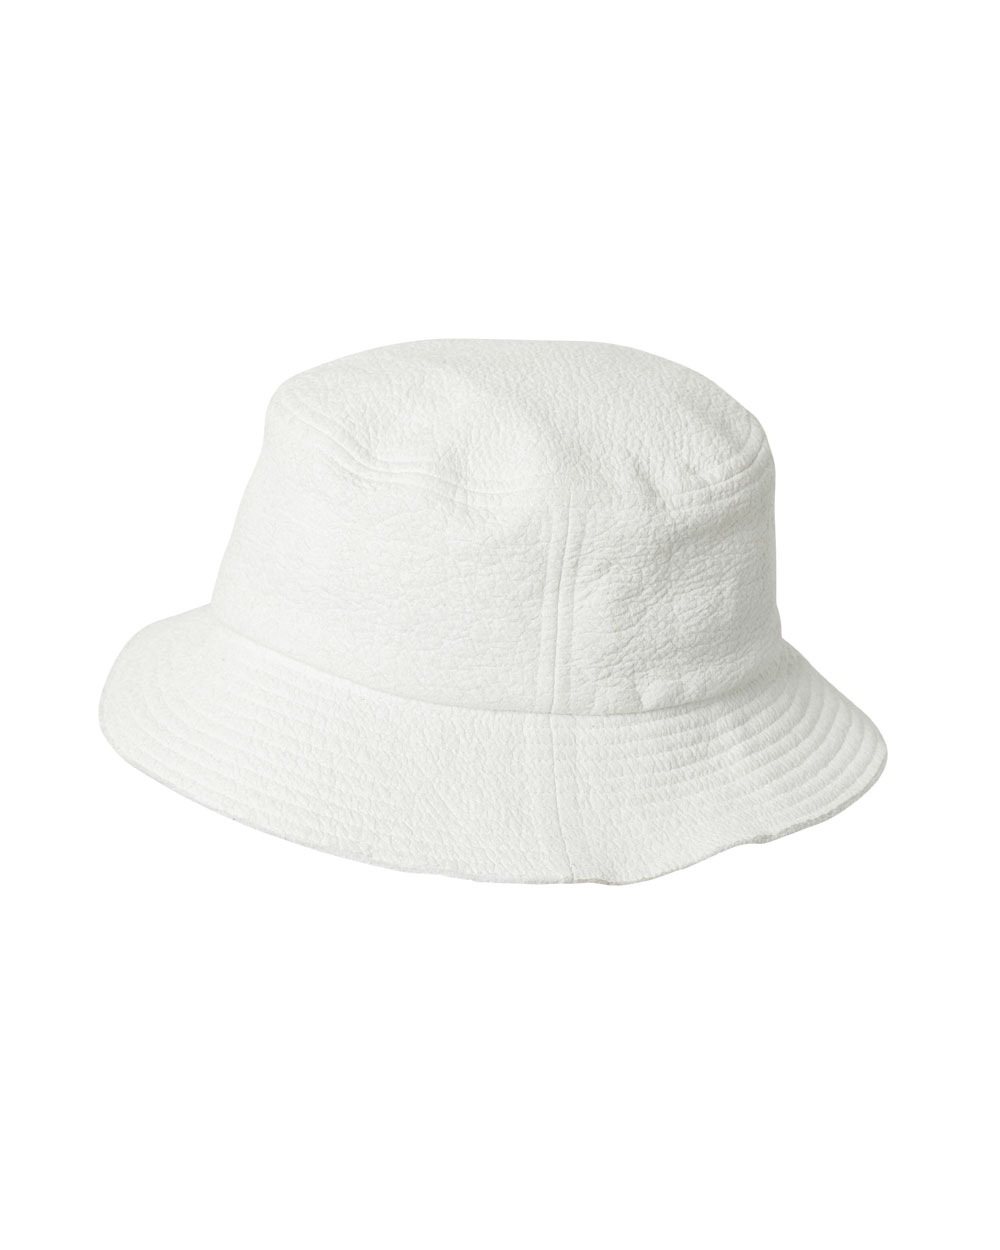 Zambesi hat, $190